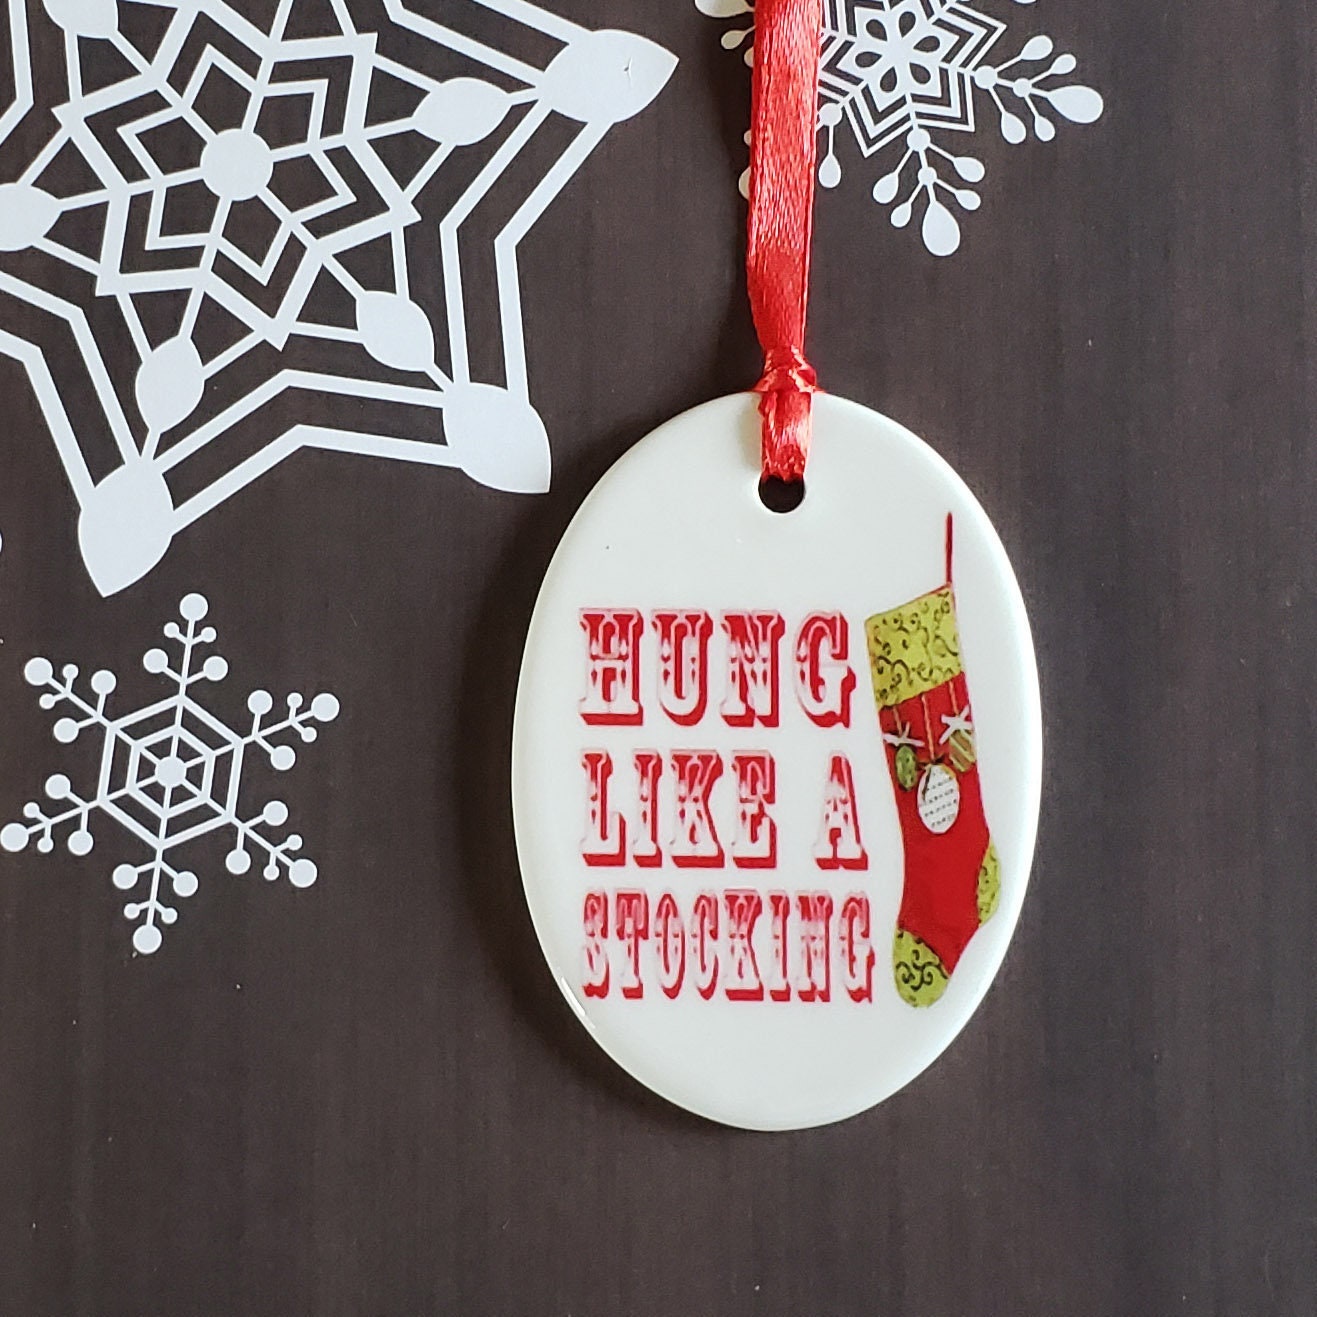 Hung Like A Stocking Christmas Ornament